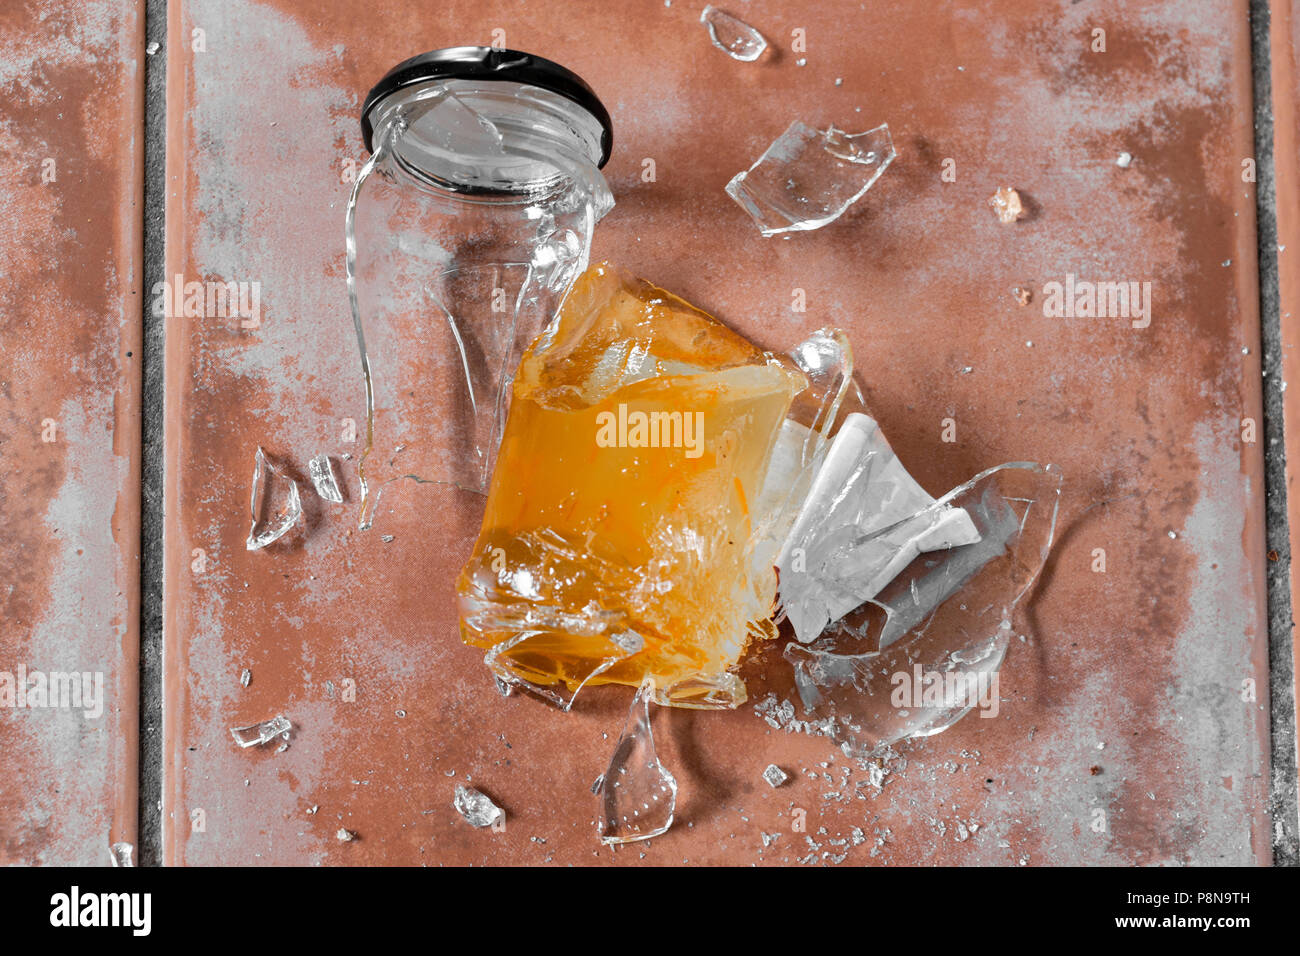 Broken marmalade glass jar on tile floor Stock Photo